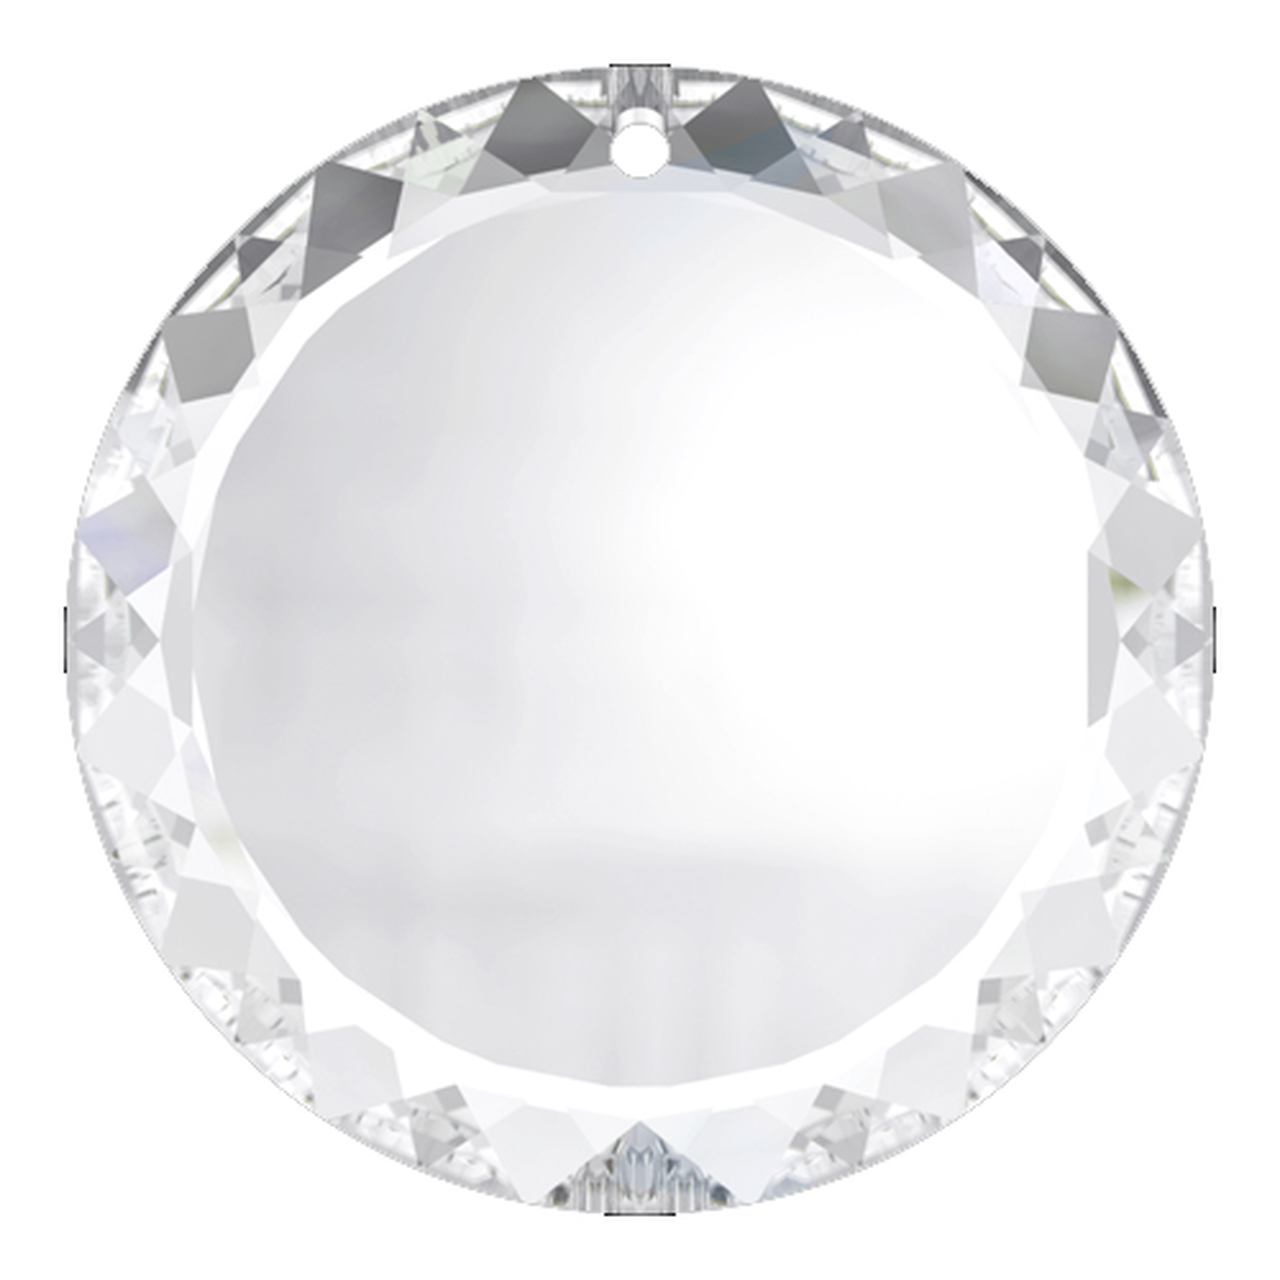 Swarovski Pendant, 20 mm, Color: Crystal (1 piece)Code: 6049-MM20